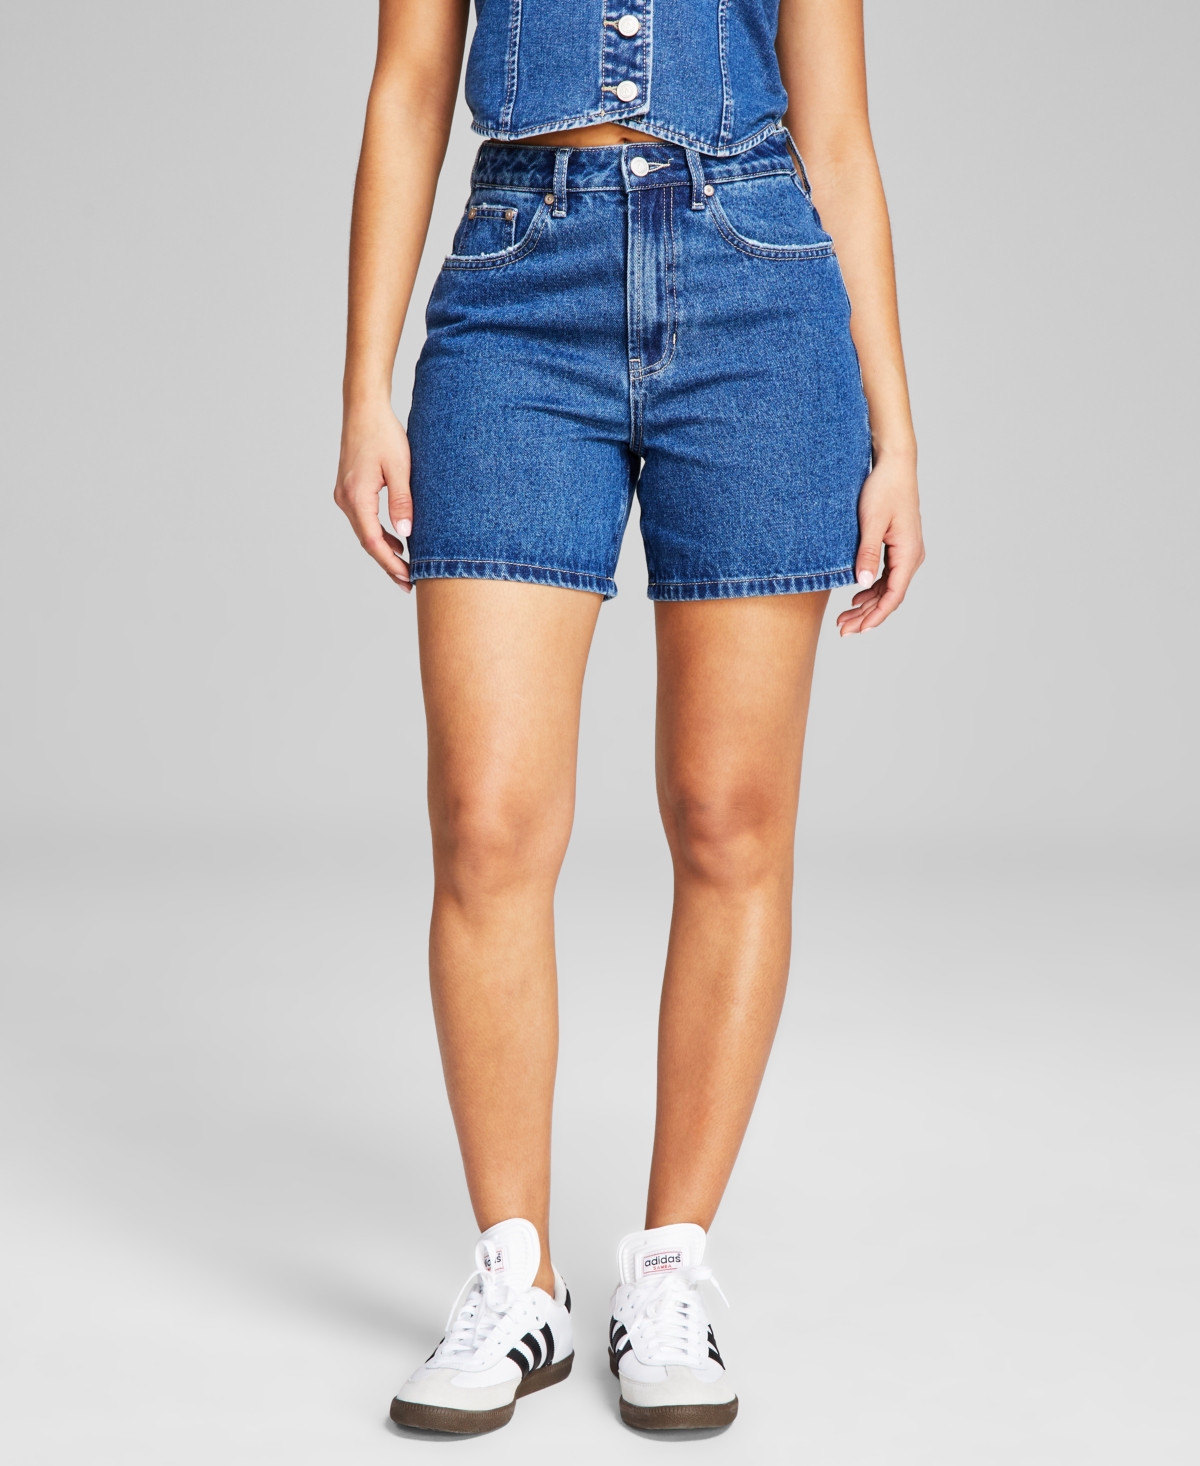 Women's High Rise Denim Shorts, Created for Macy's - Medium Was